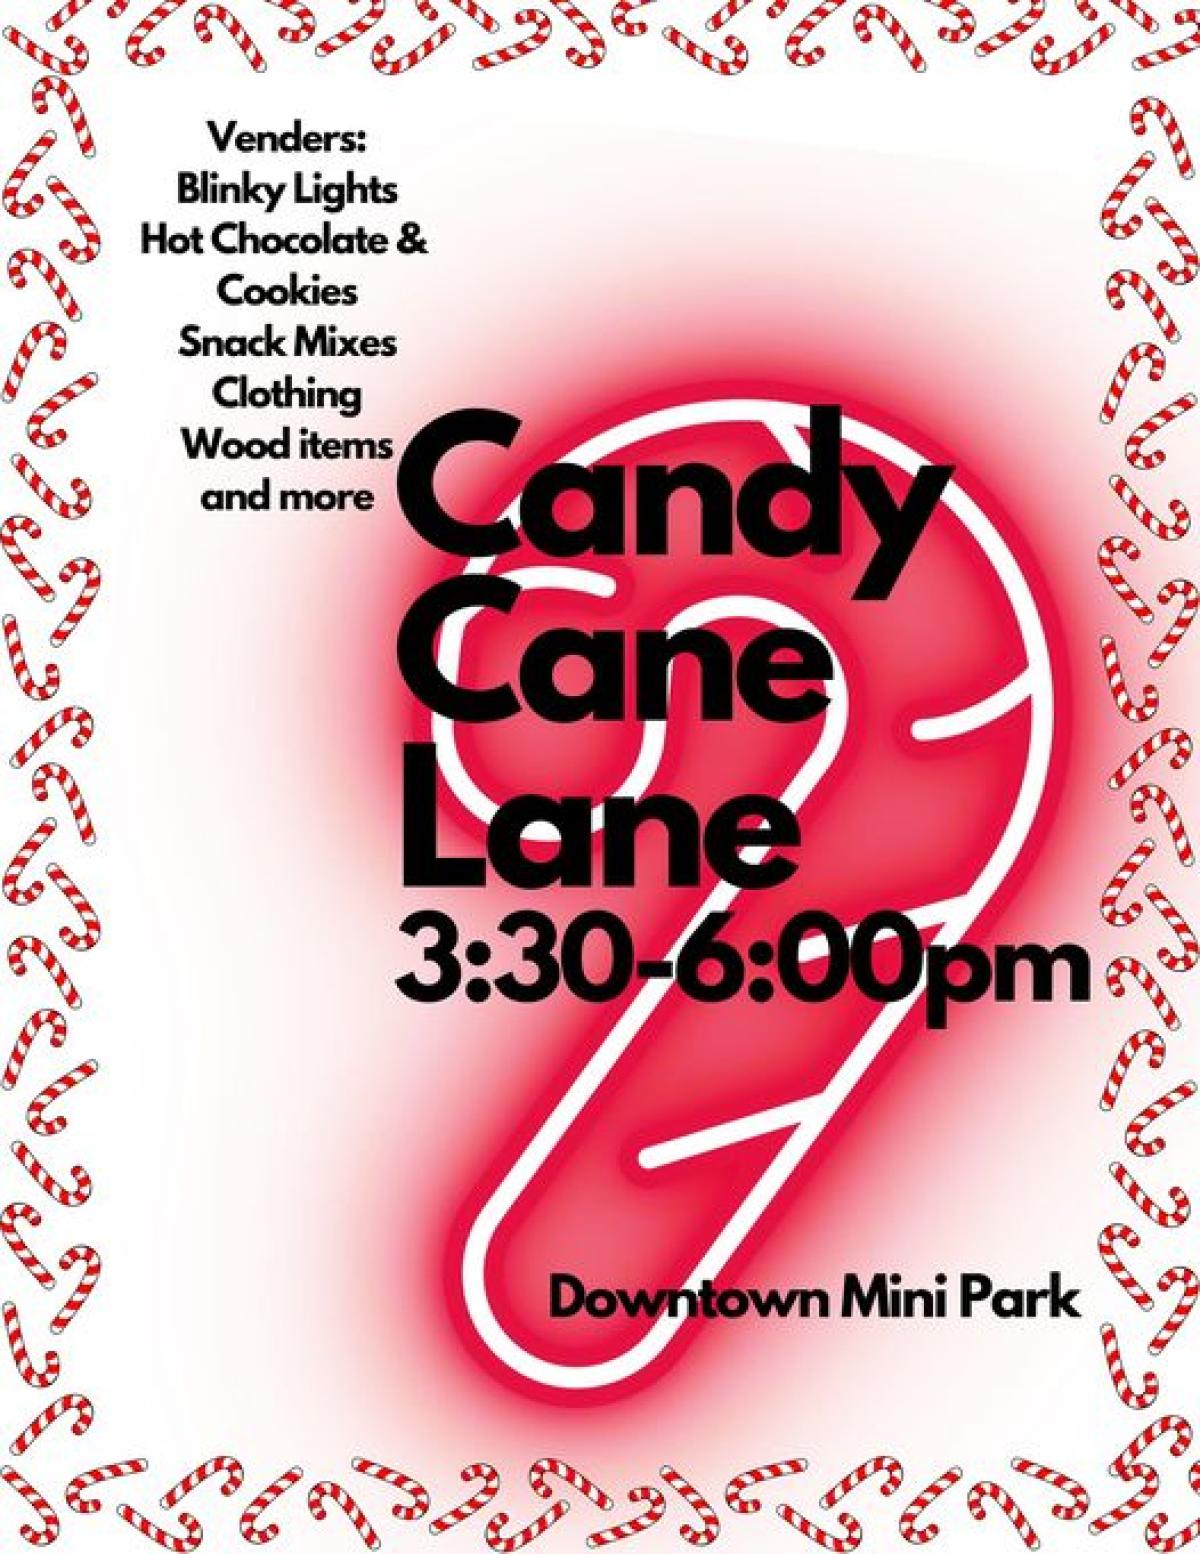 Chamber Candy Cane Lane